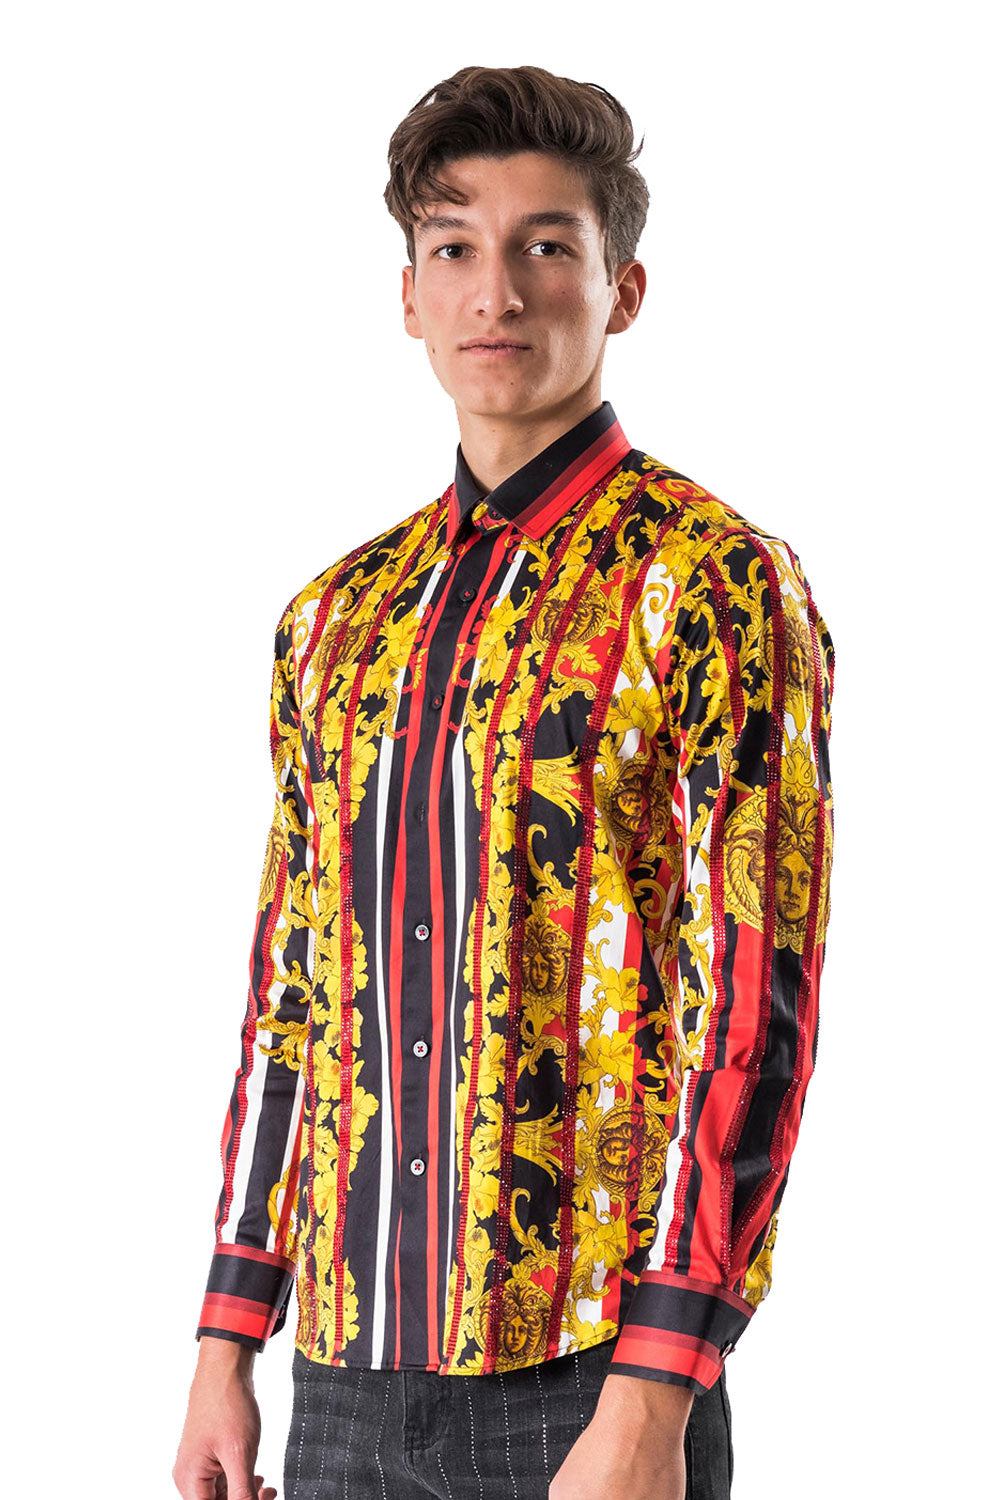 BARABAS Men's Floral Medusa Printed Multi Color Button Shirts SPR952